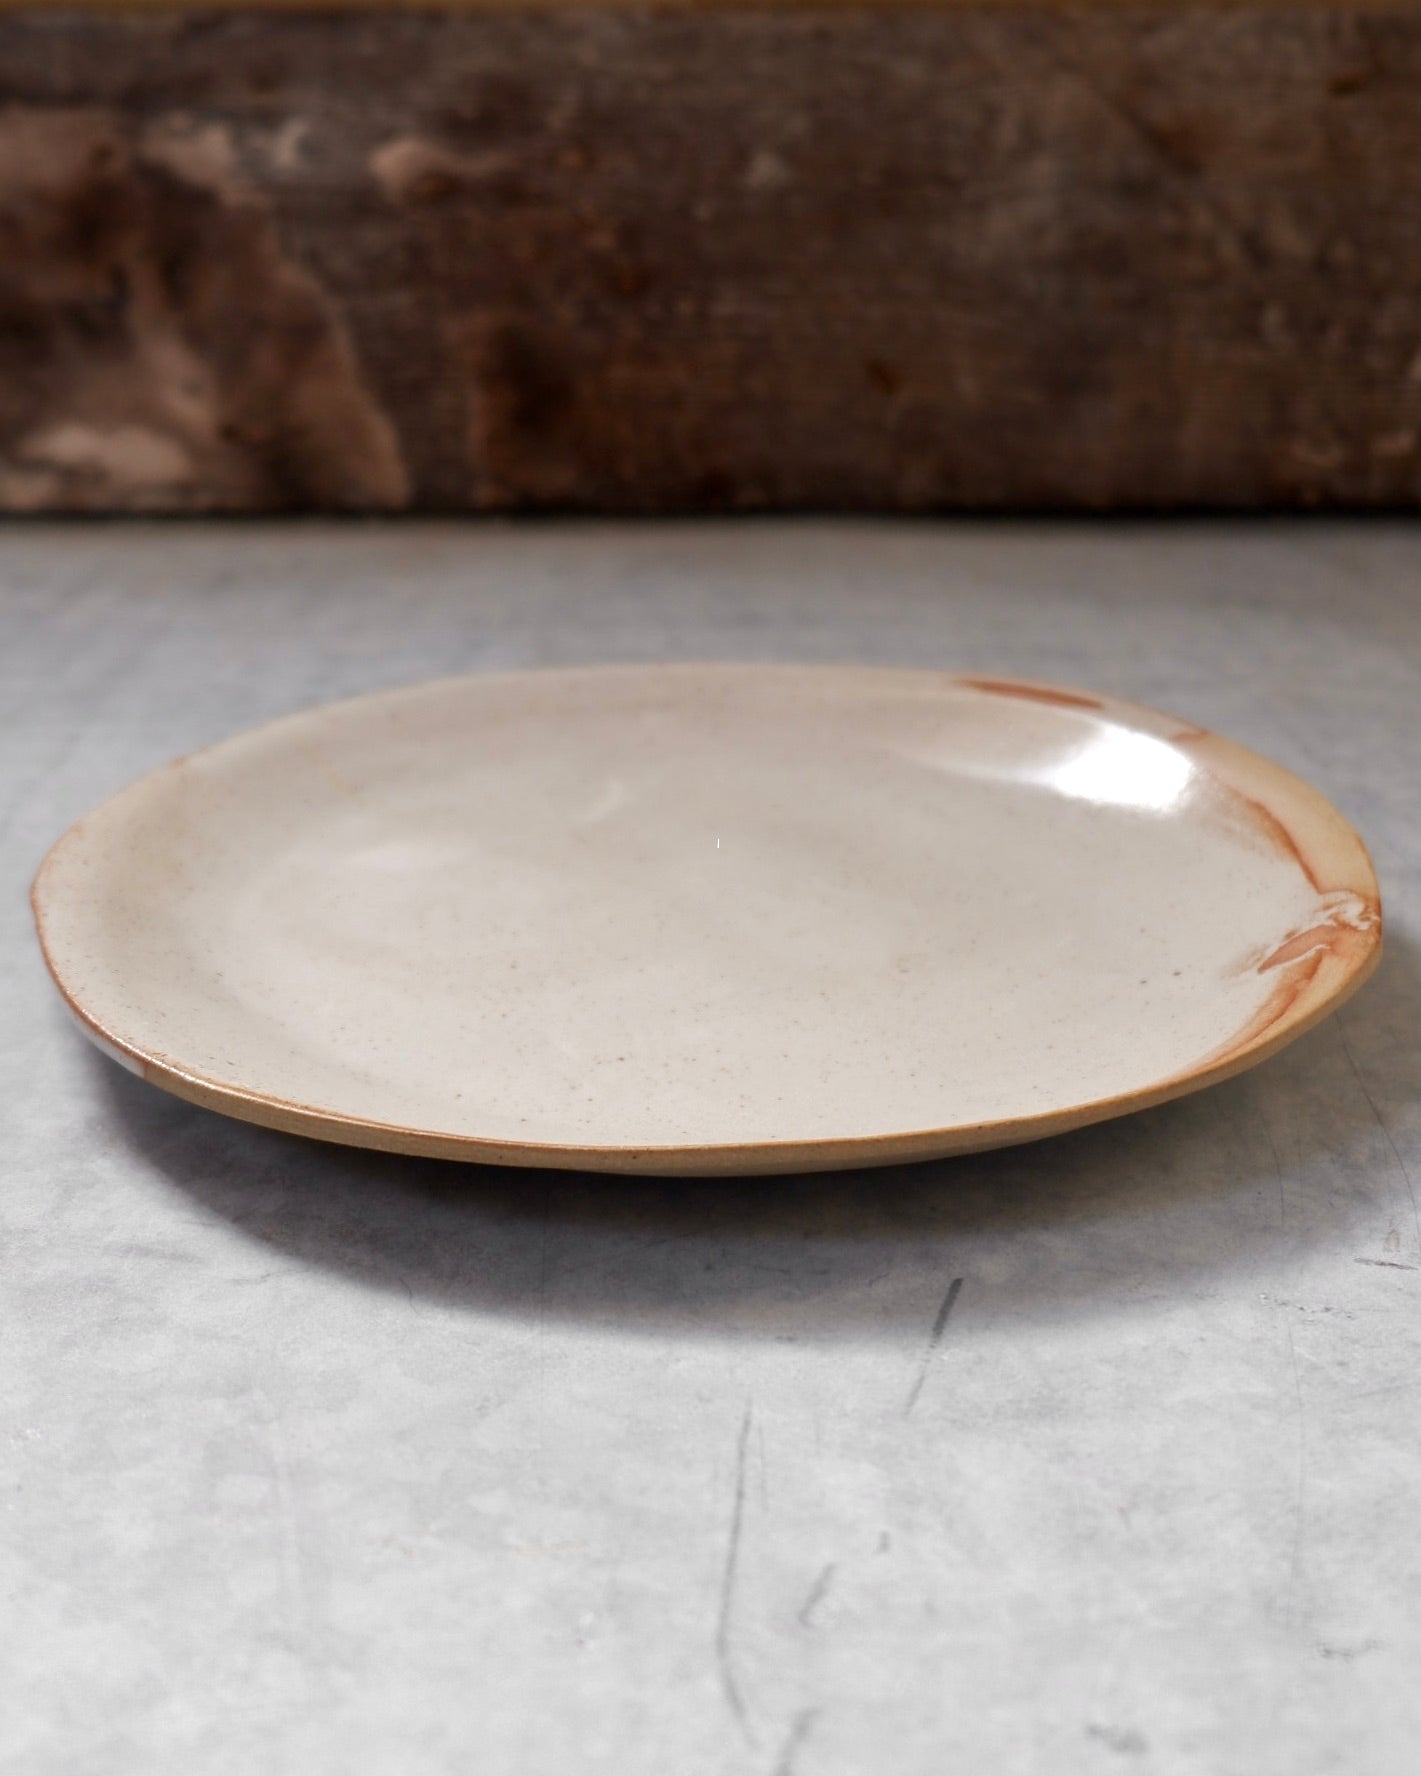 humbleyard ceramics hand thrown rustic homeware kitchenware dinner plate